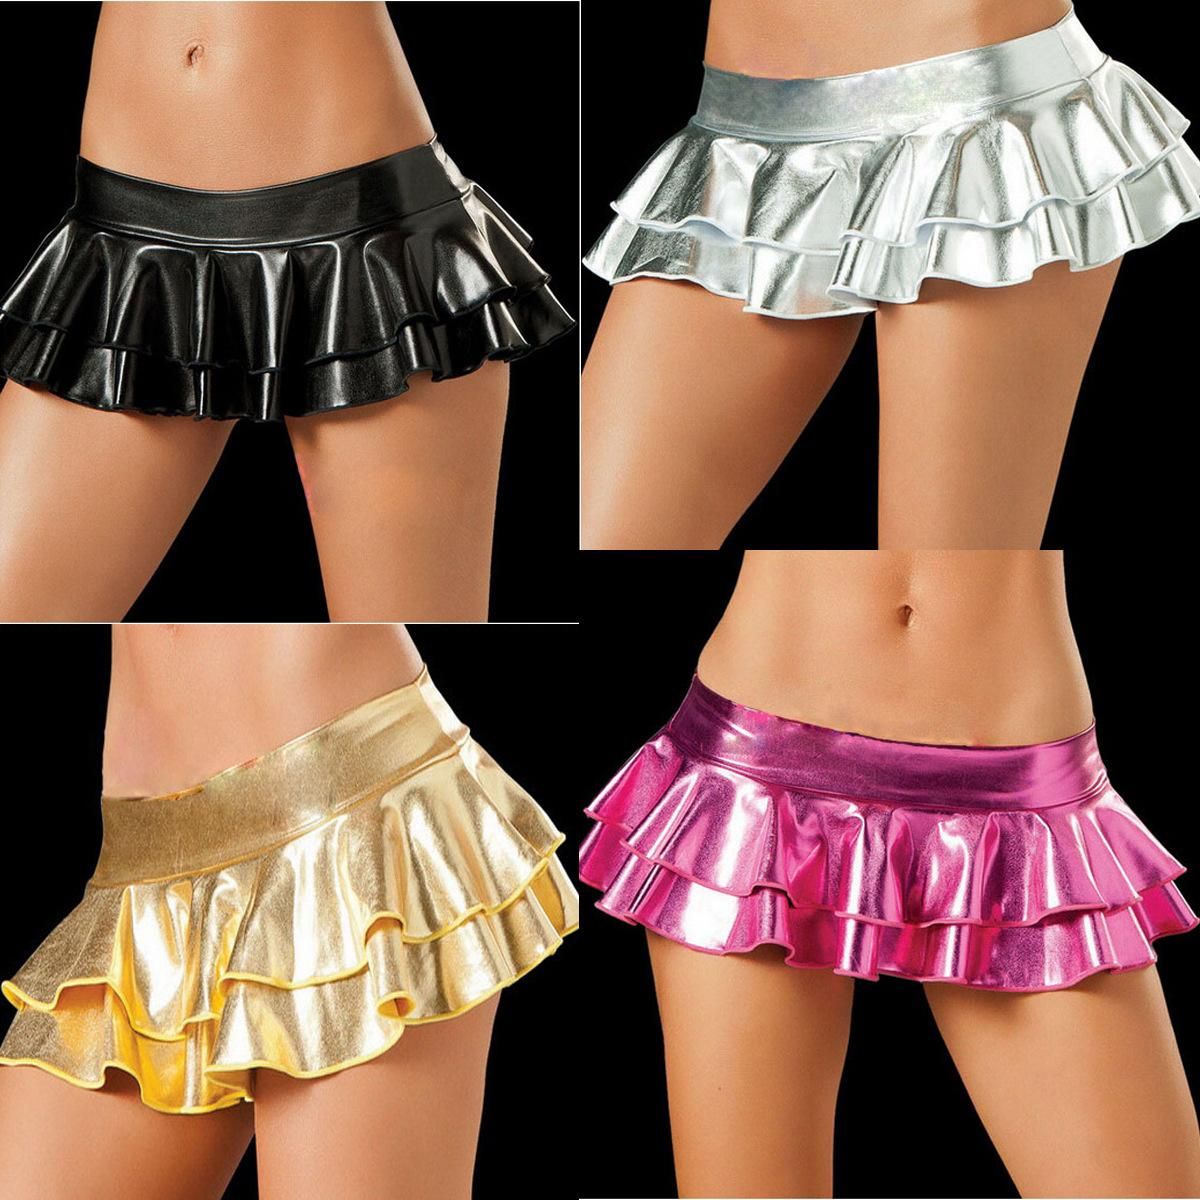 ciara bond share sexy mini skirt dance photos